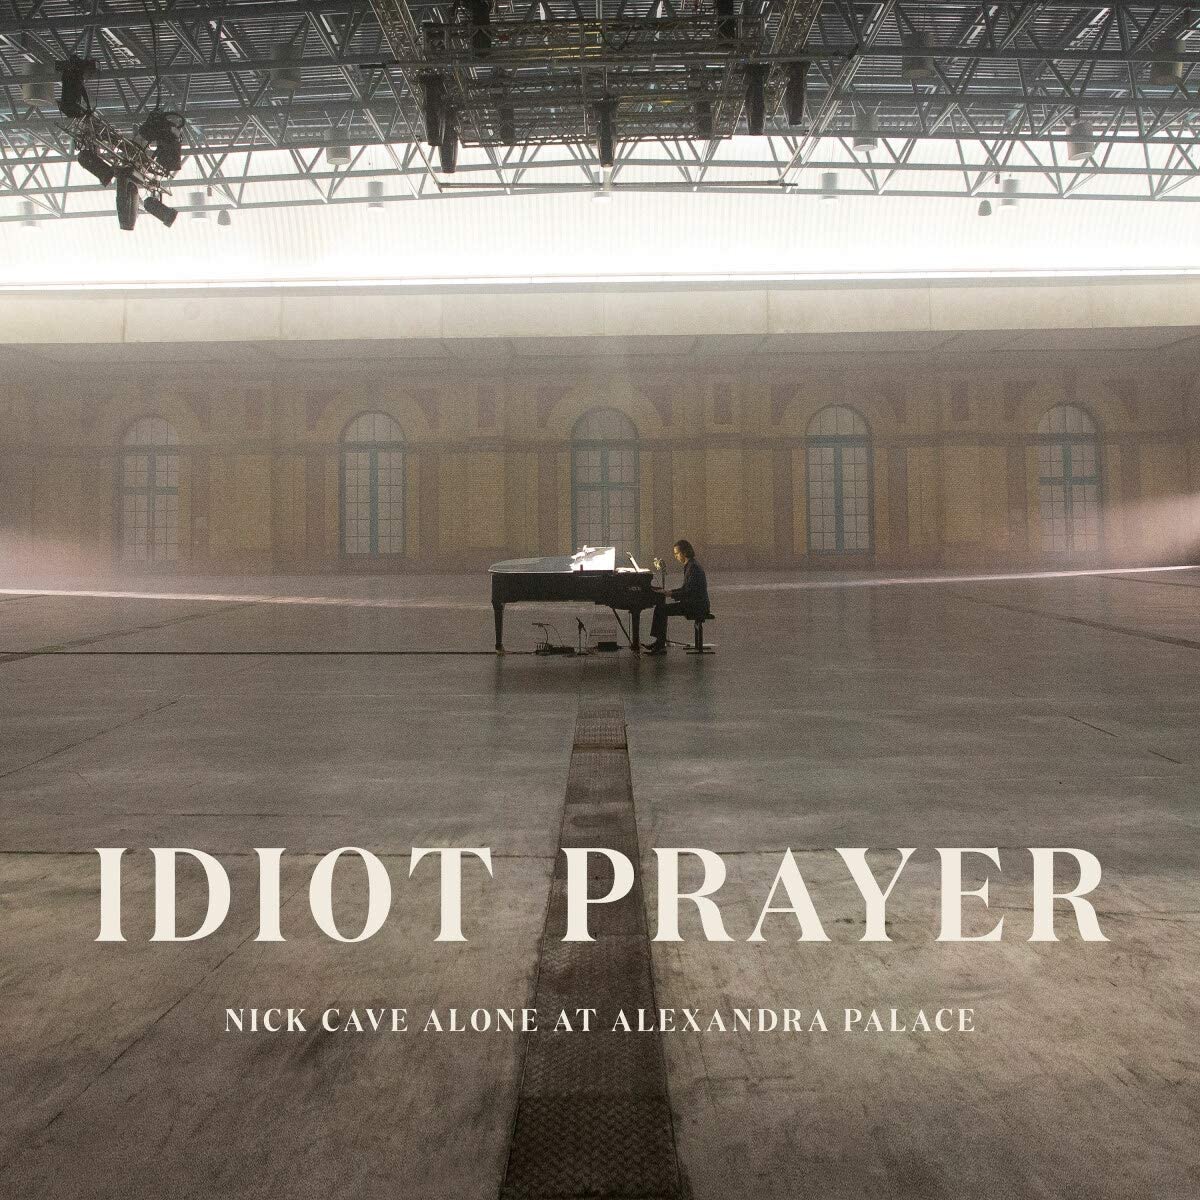 Nick Cave Idiot prayer migliori dischi classifica 2020